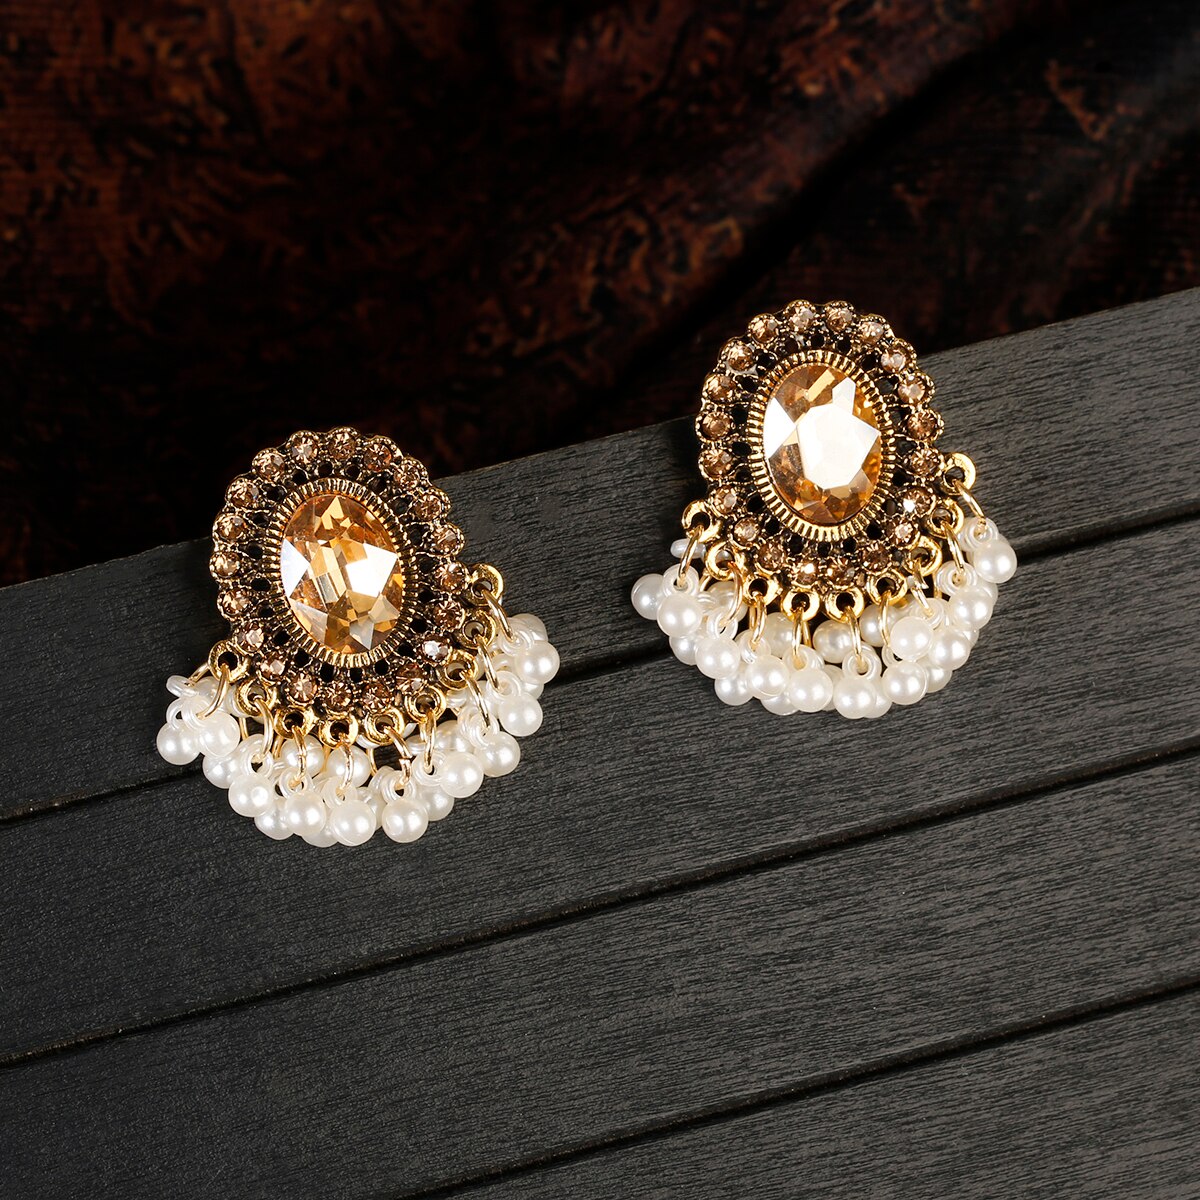 Classic-Blue-Crystal-Indian-Earrings-For-Women-Pendientes-Luxury-Pearl-Tassel-Earrings-Jewelry-Brinc-1005003753178643-2